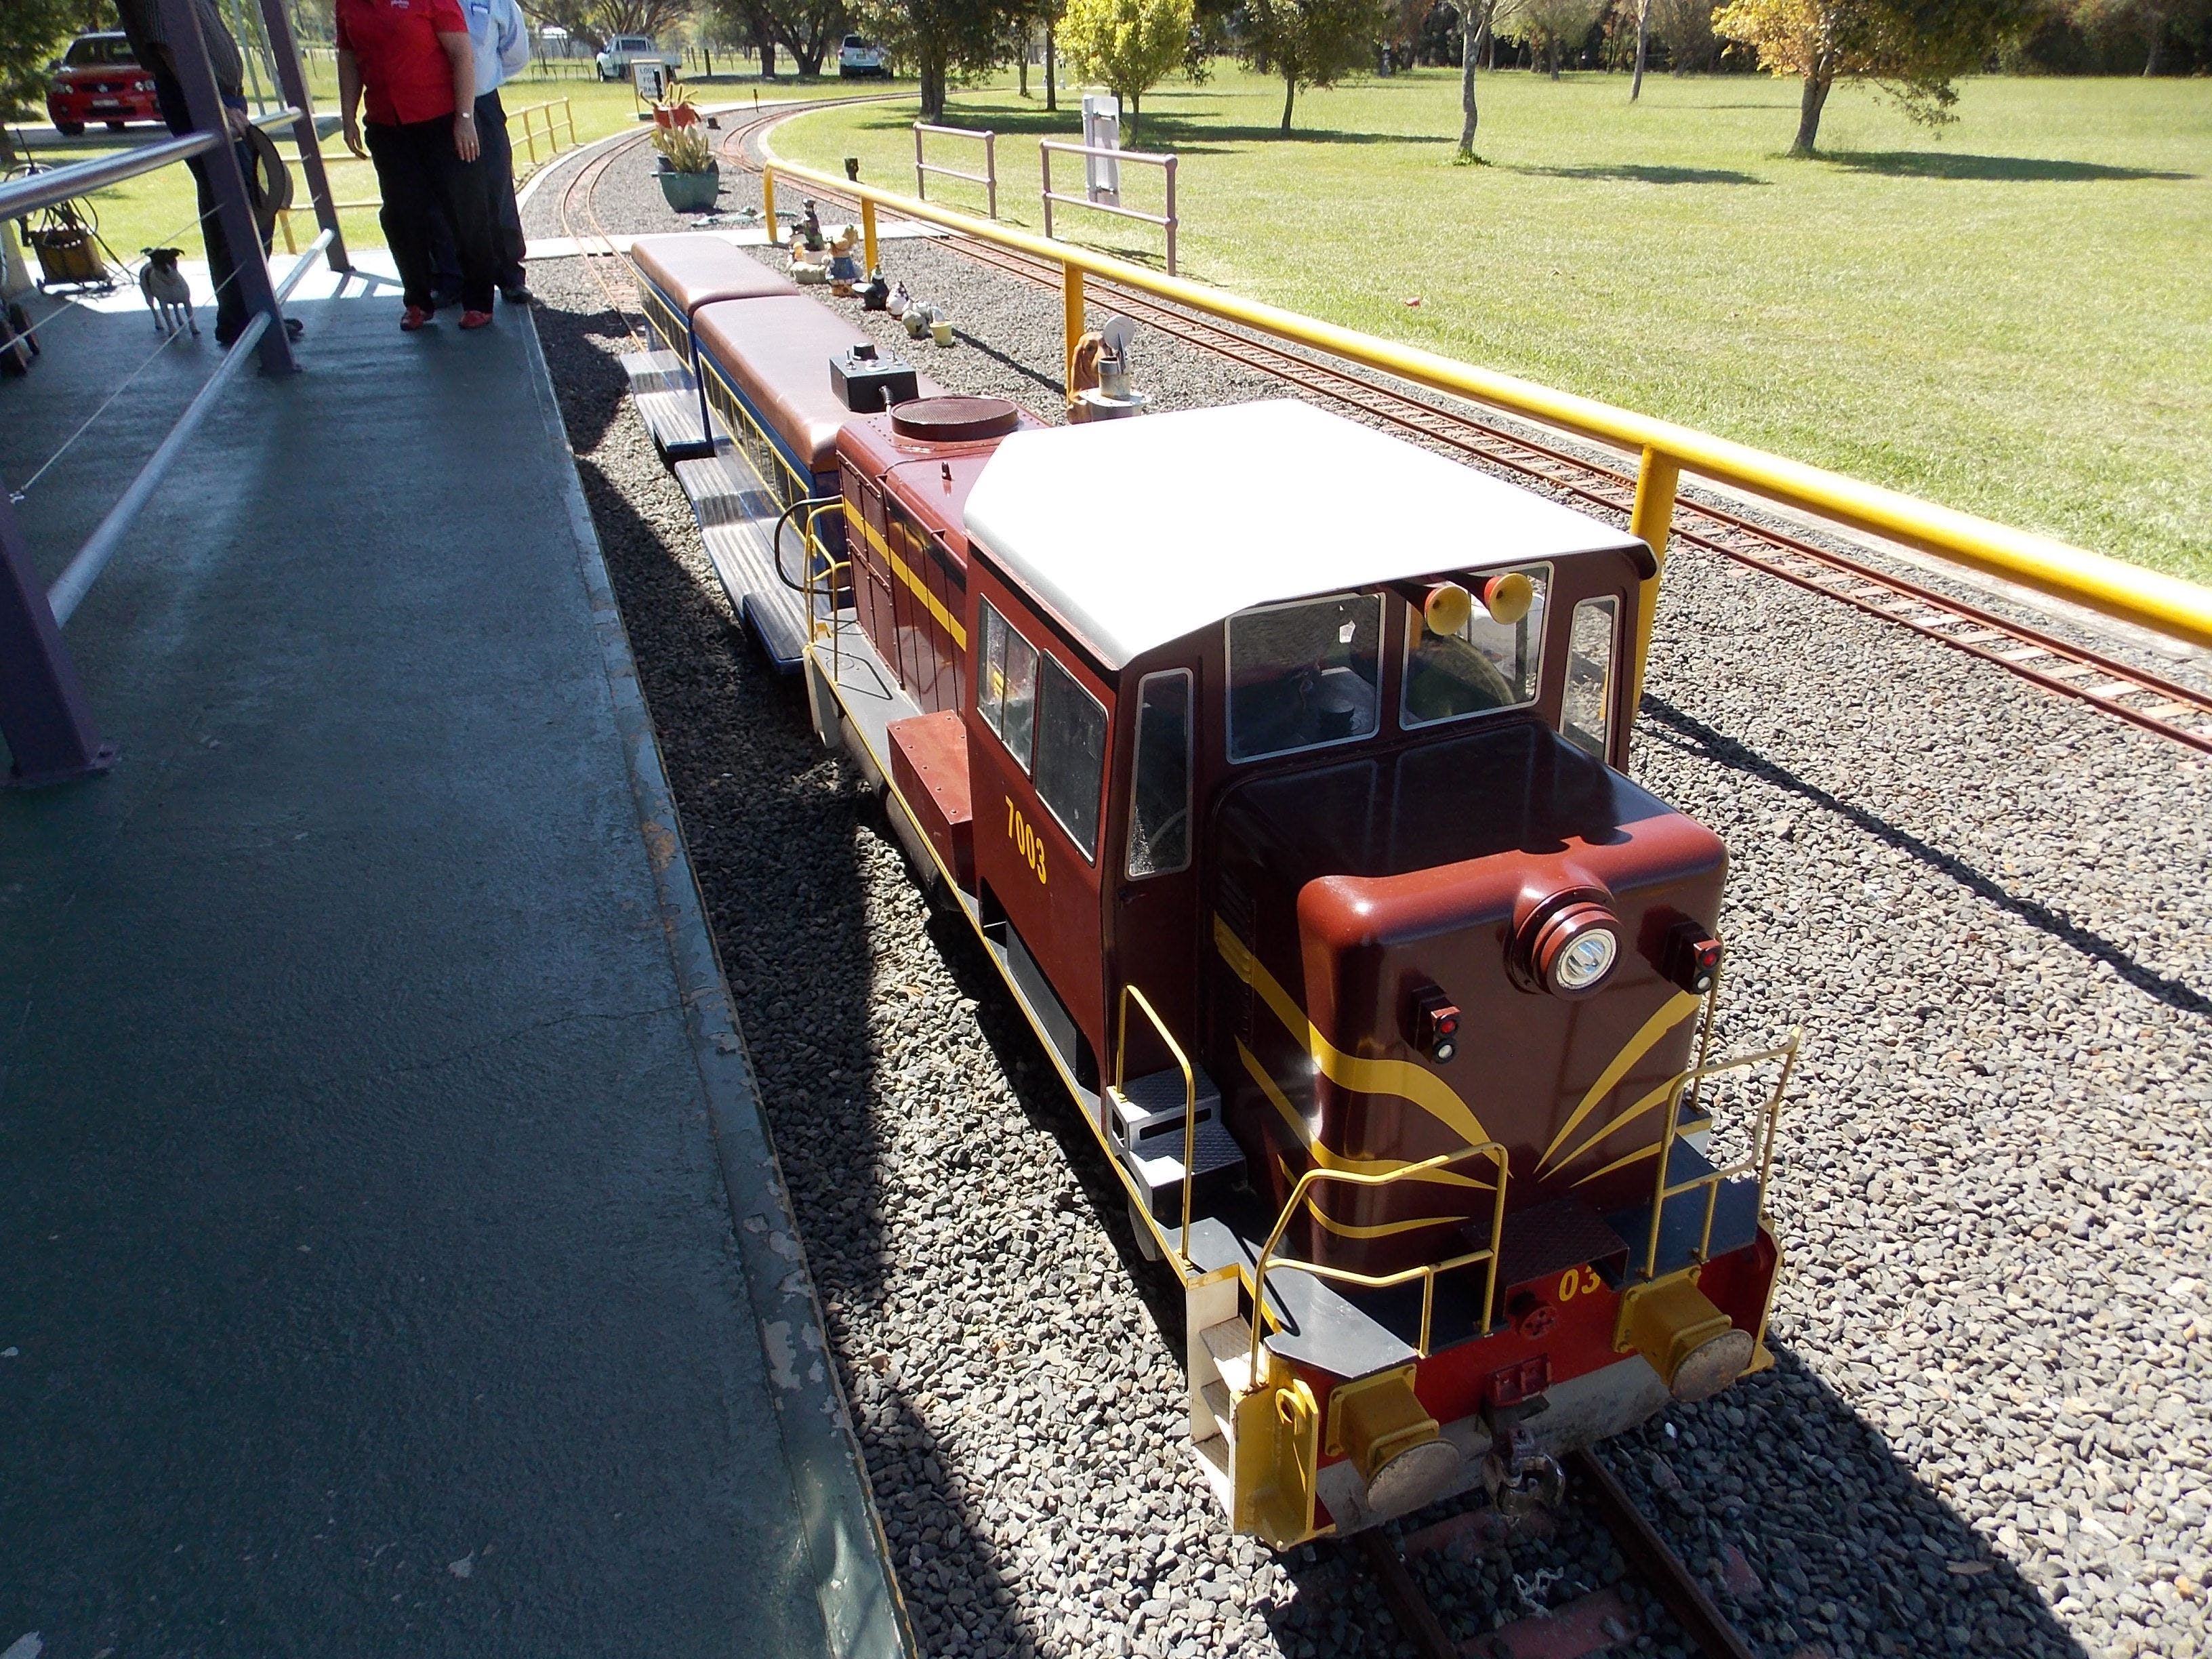 Penwood Miniature Railway - Accommodation in Brisbane